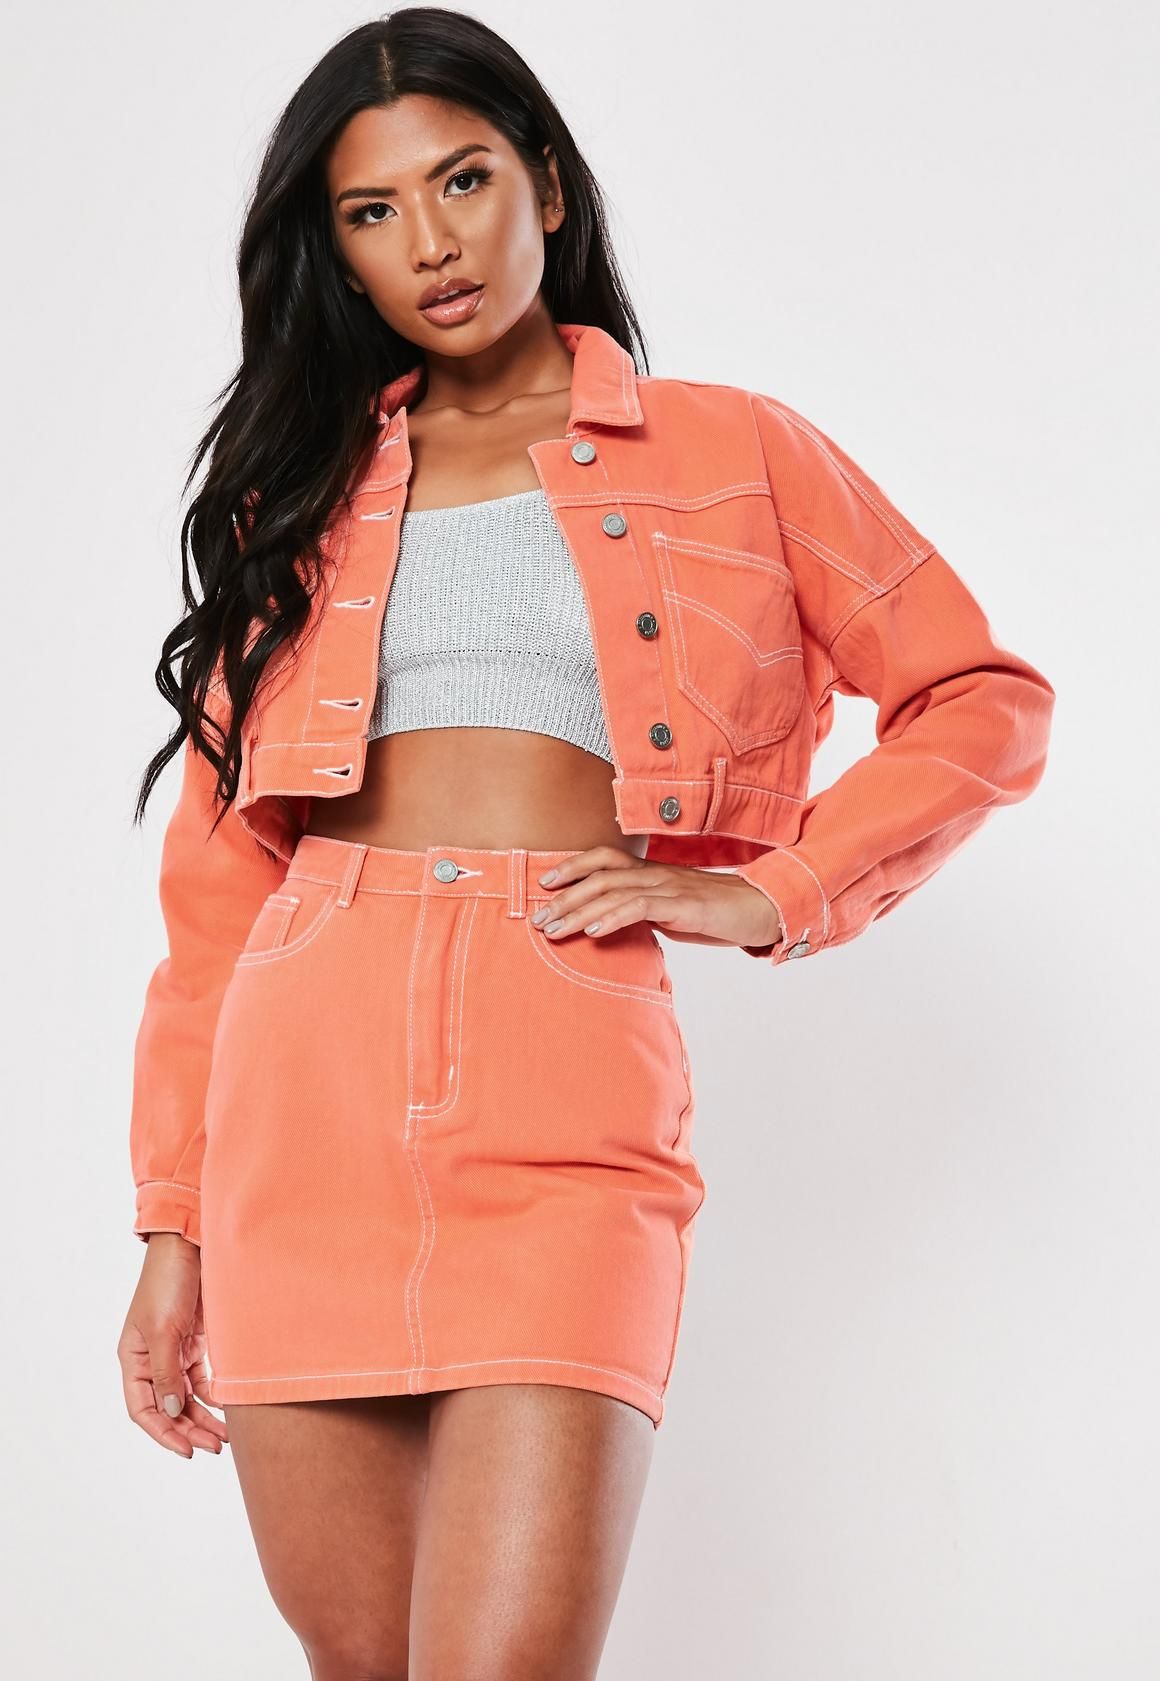 orange denim jacket and skirt